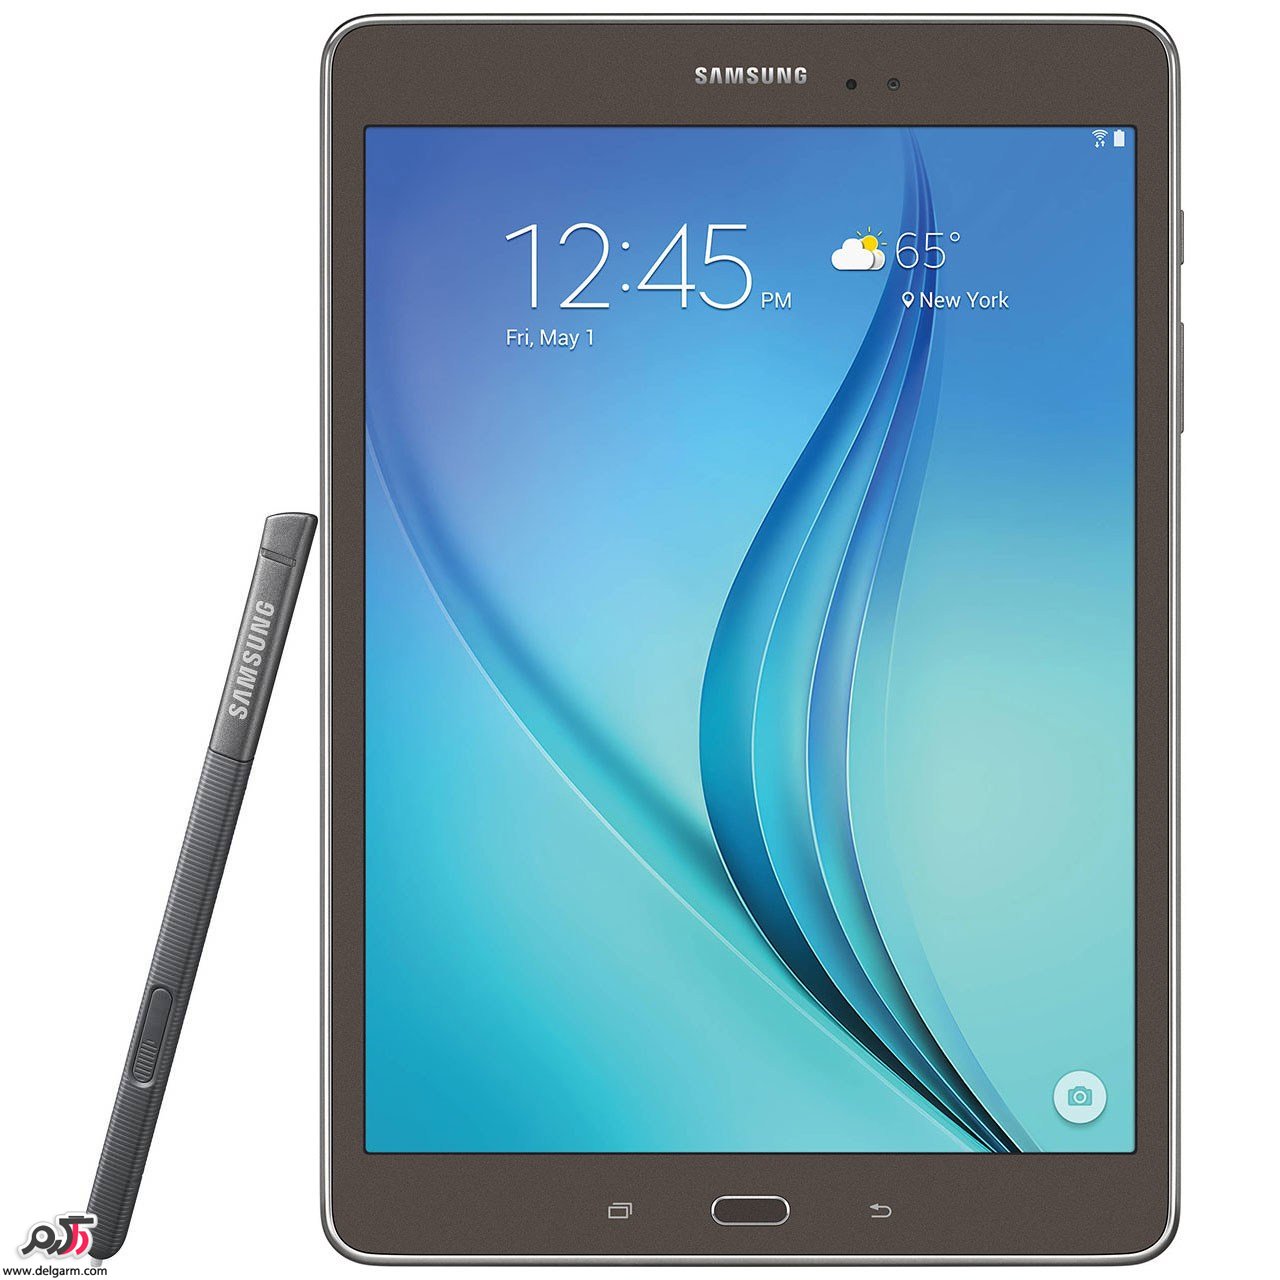 تبلت سامسونگ مدل Galaxy Tab S2 8.0 New Edition LTE ظرفيت 32 گيگابايت